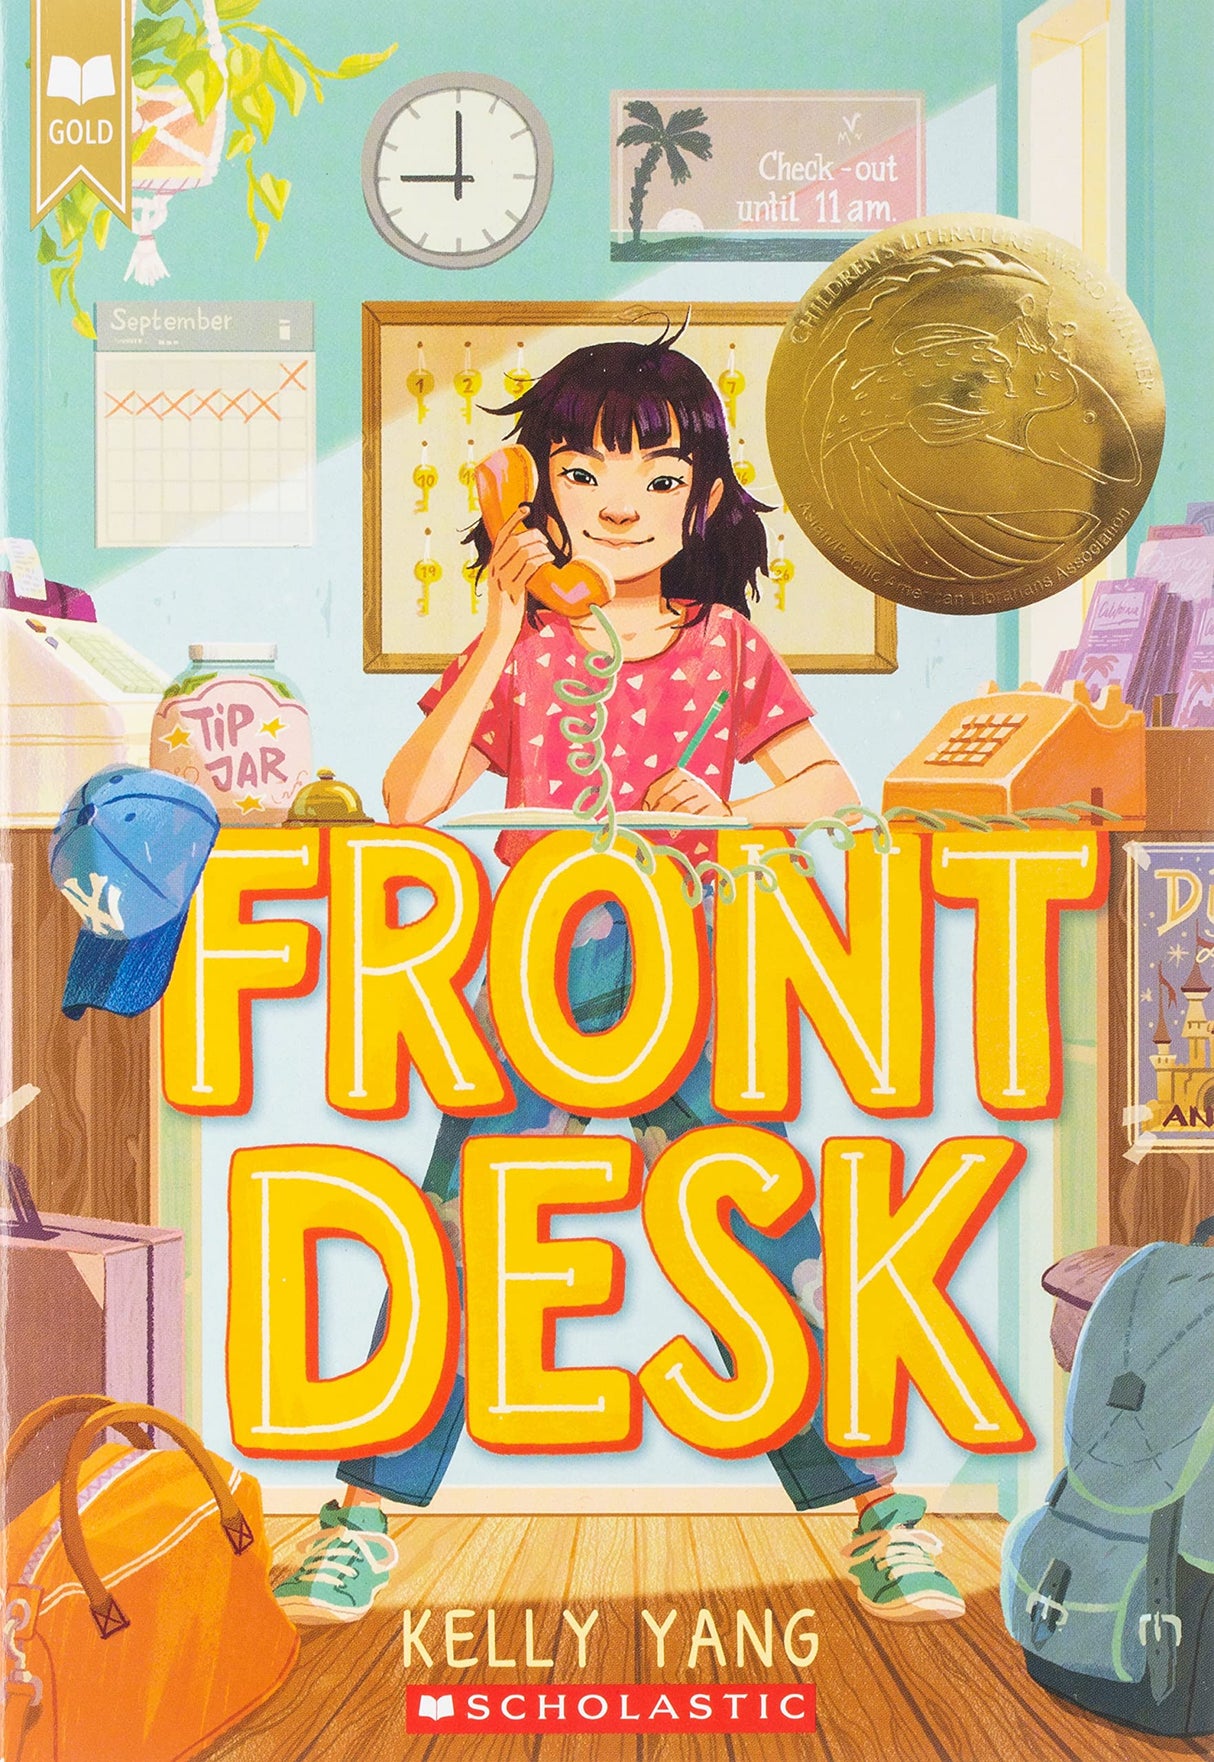 Front Desk